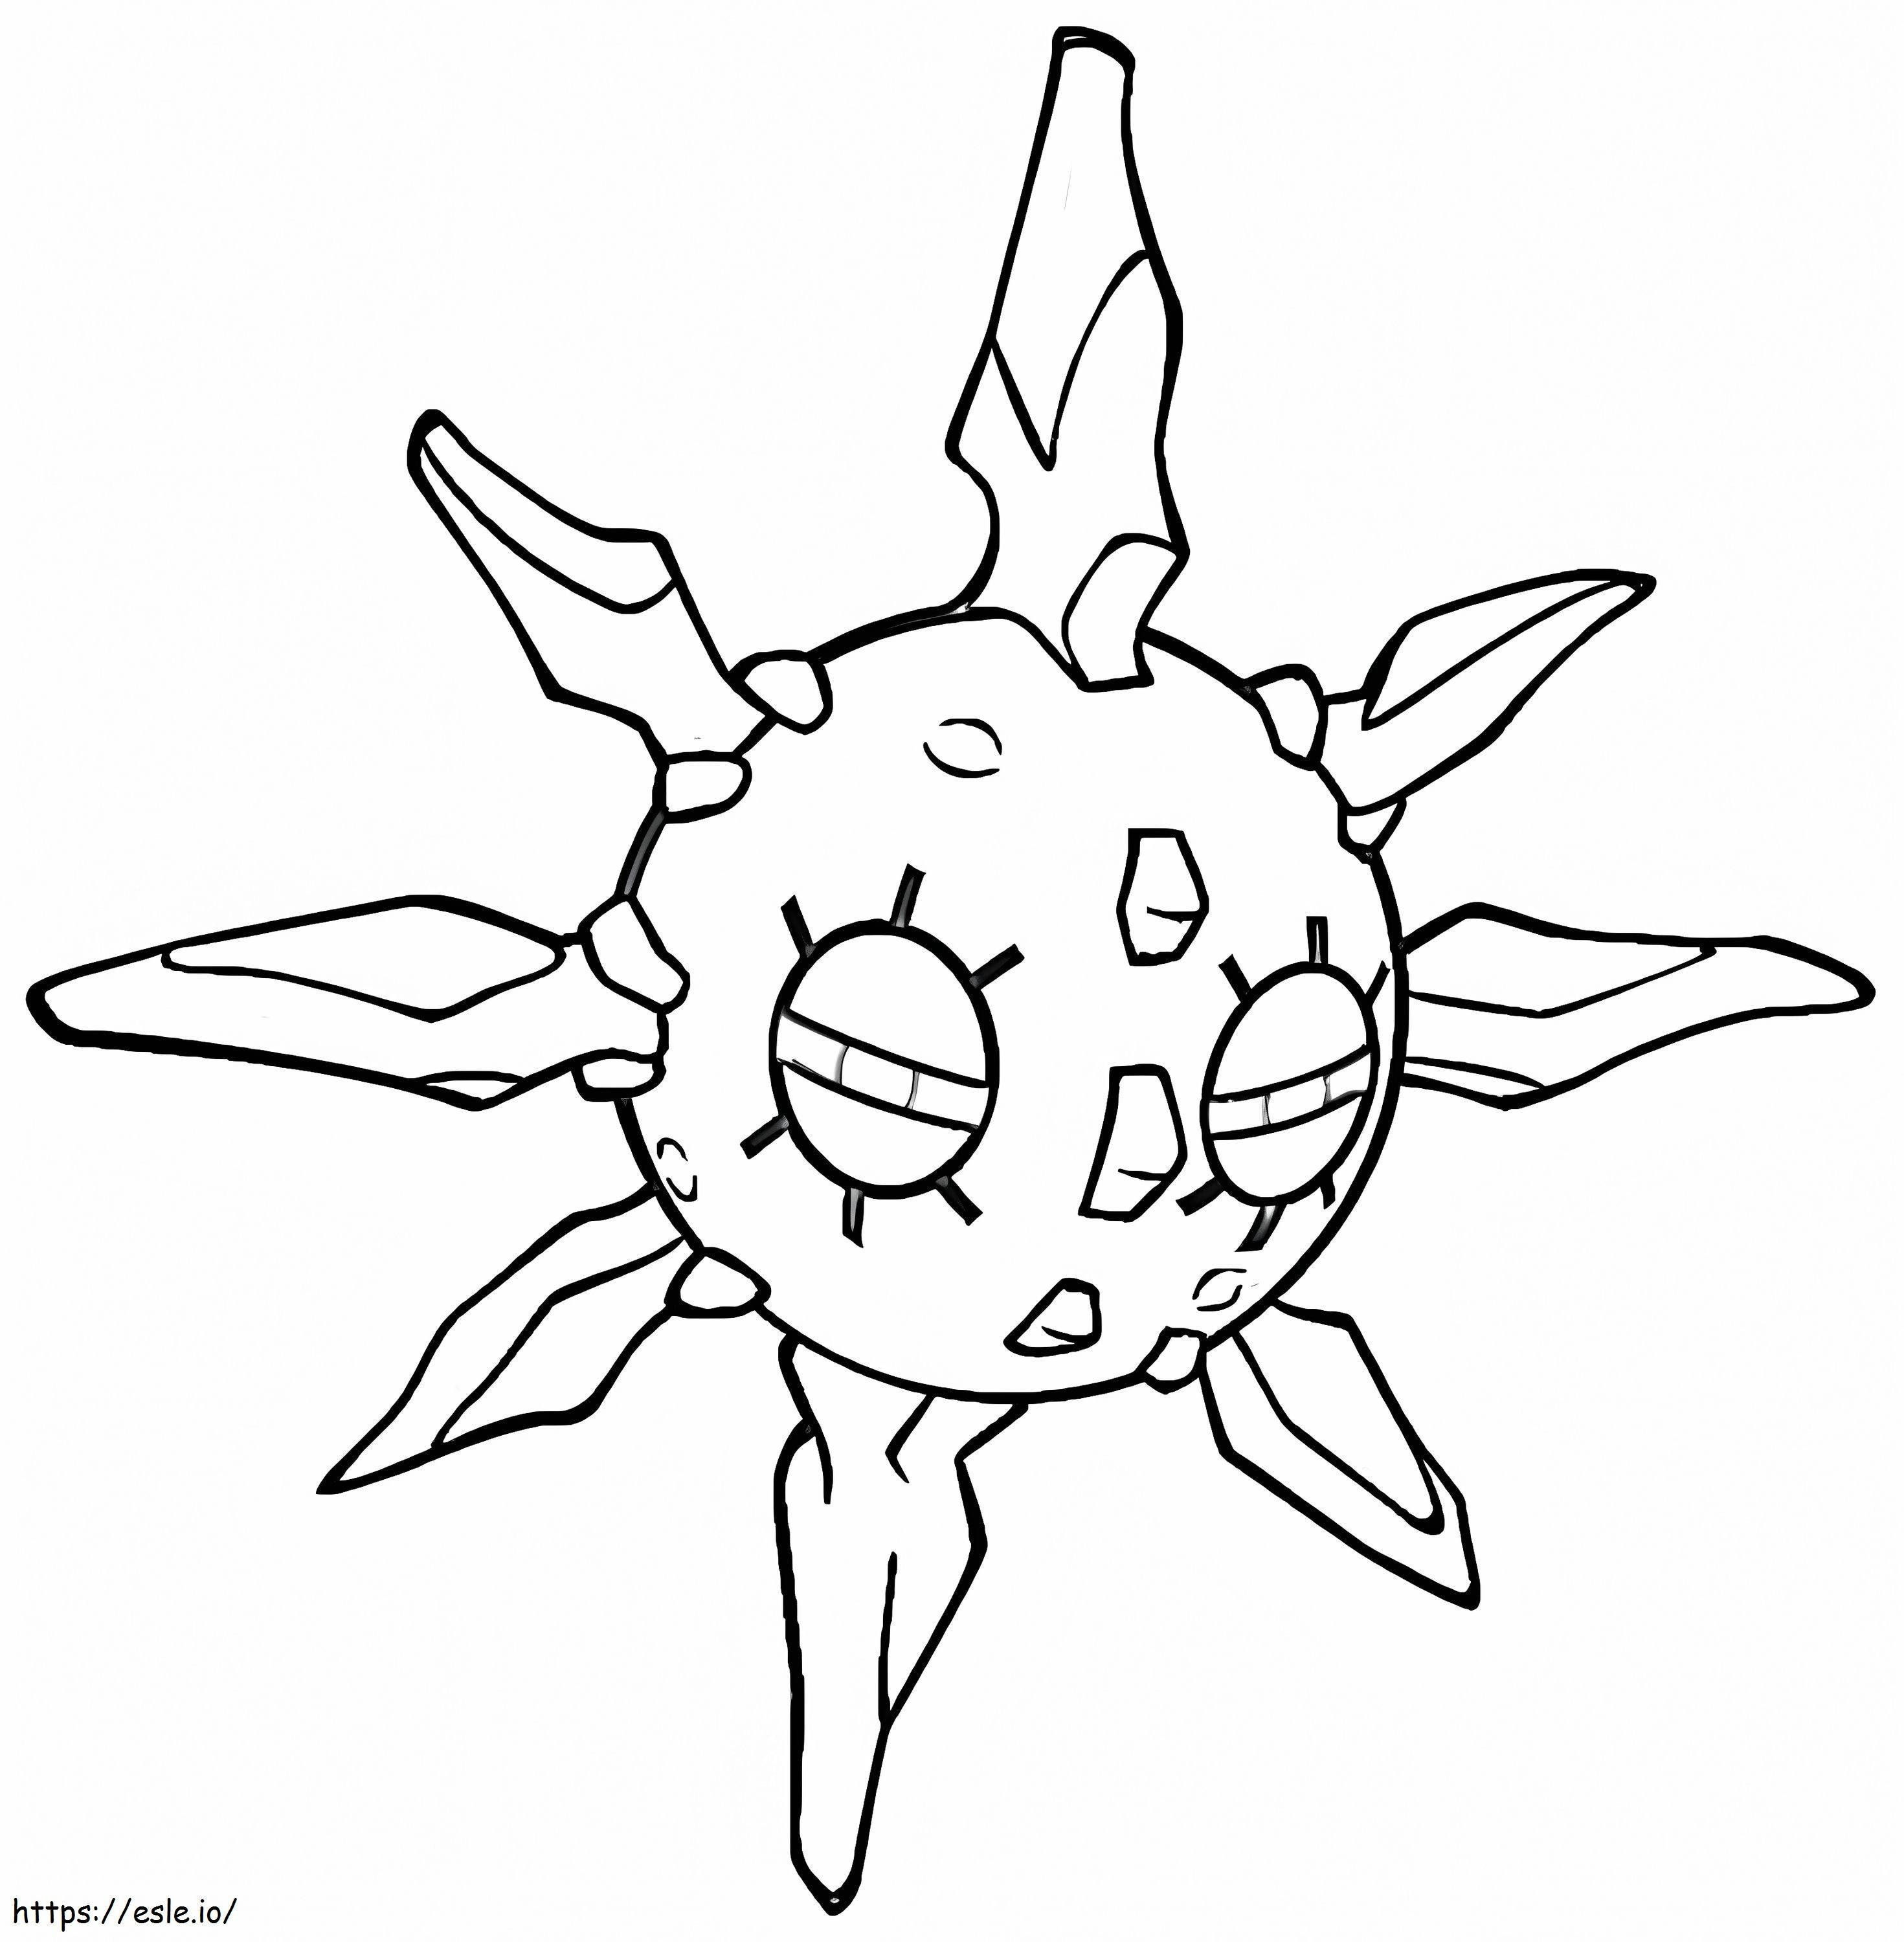 Solrock Pokemon 1 coloring page